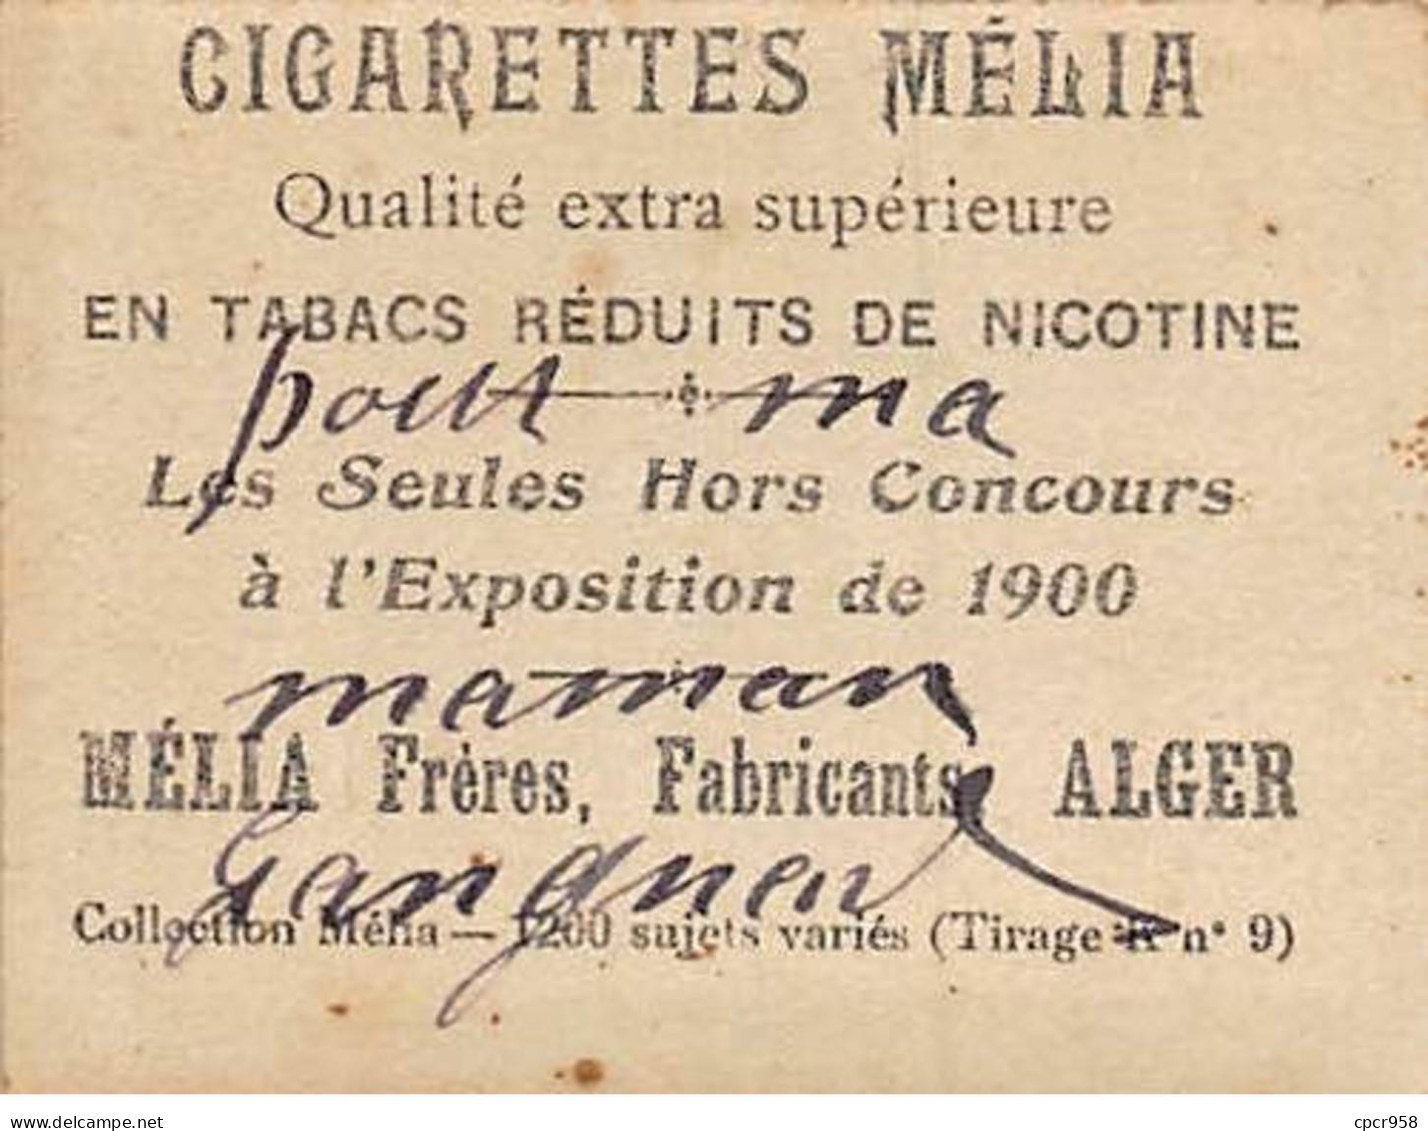 Chromos - COR10002 - Cigarettes Melia - Tabac - Alger - L'OUD M'SILA - 6x5 Cm Environ - Melia